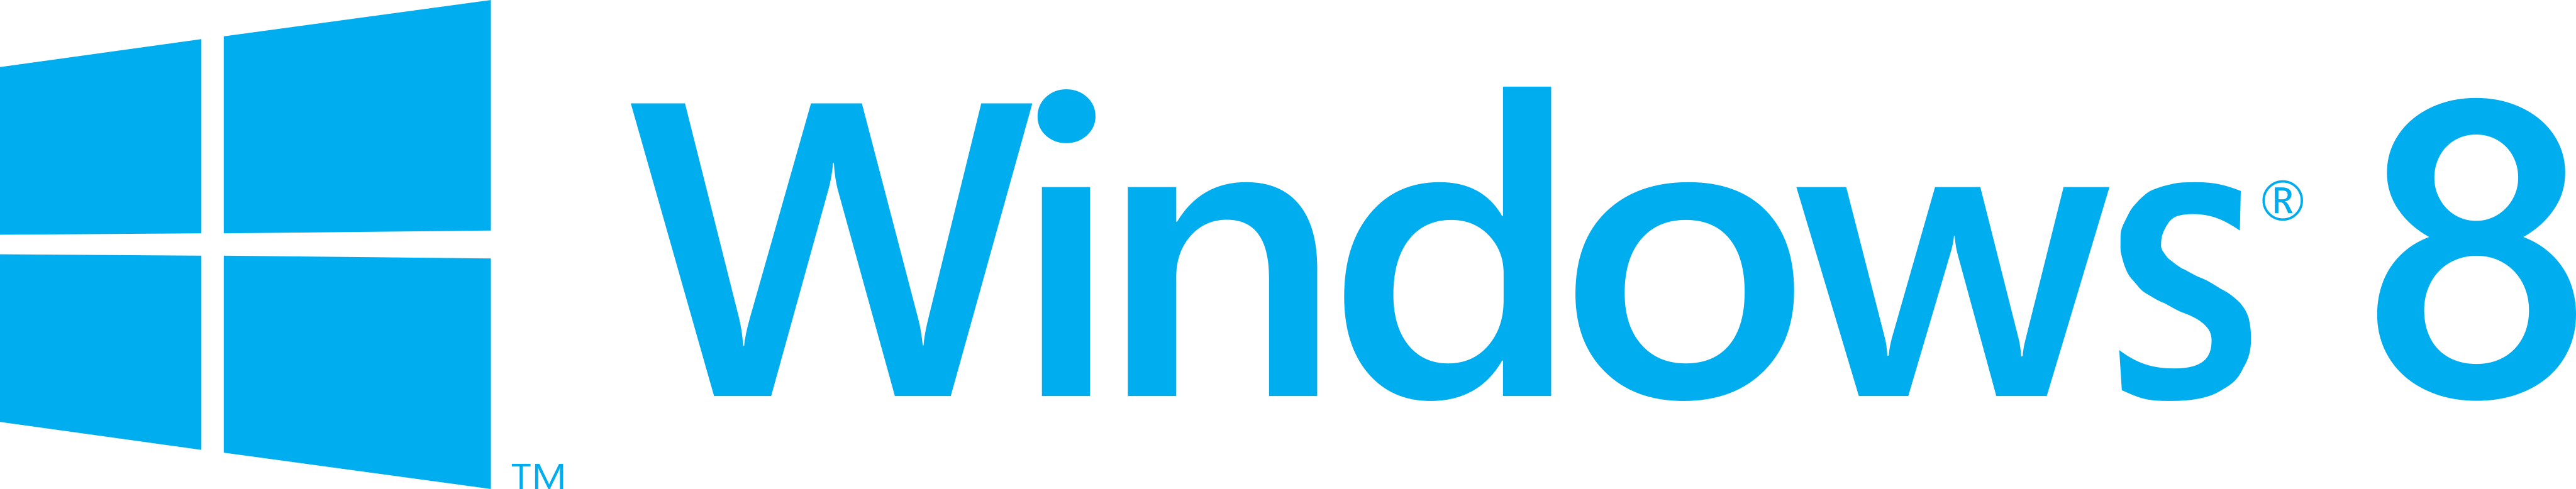 Windows 8 Logo.